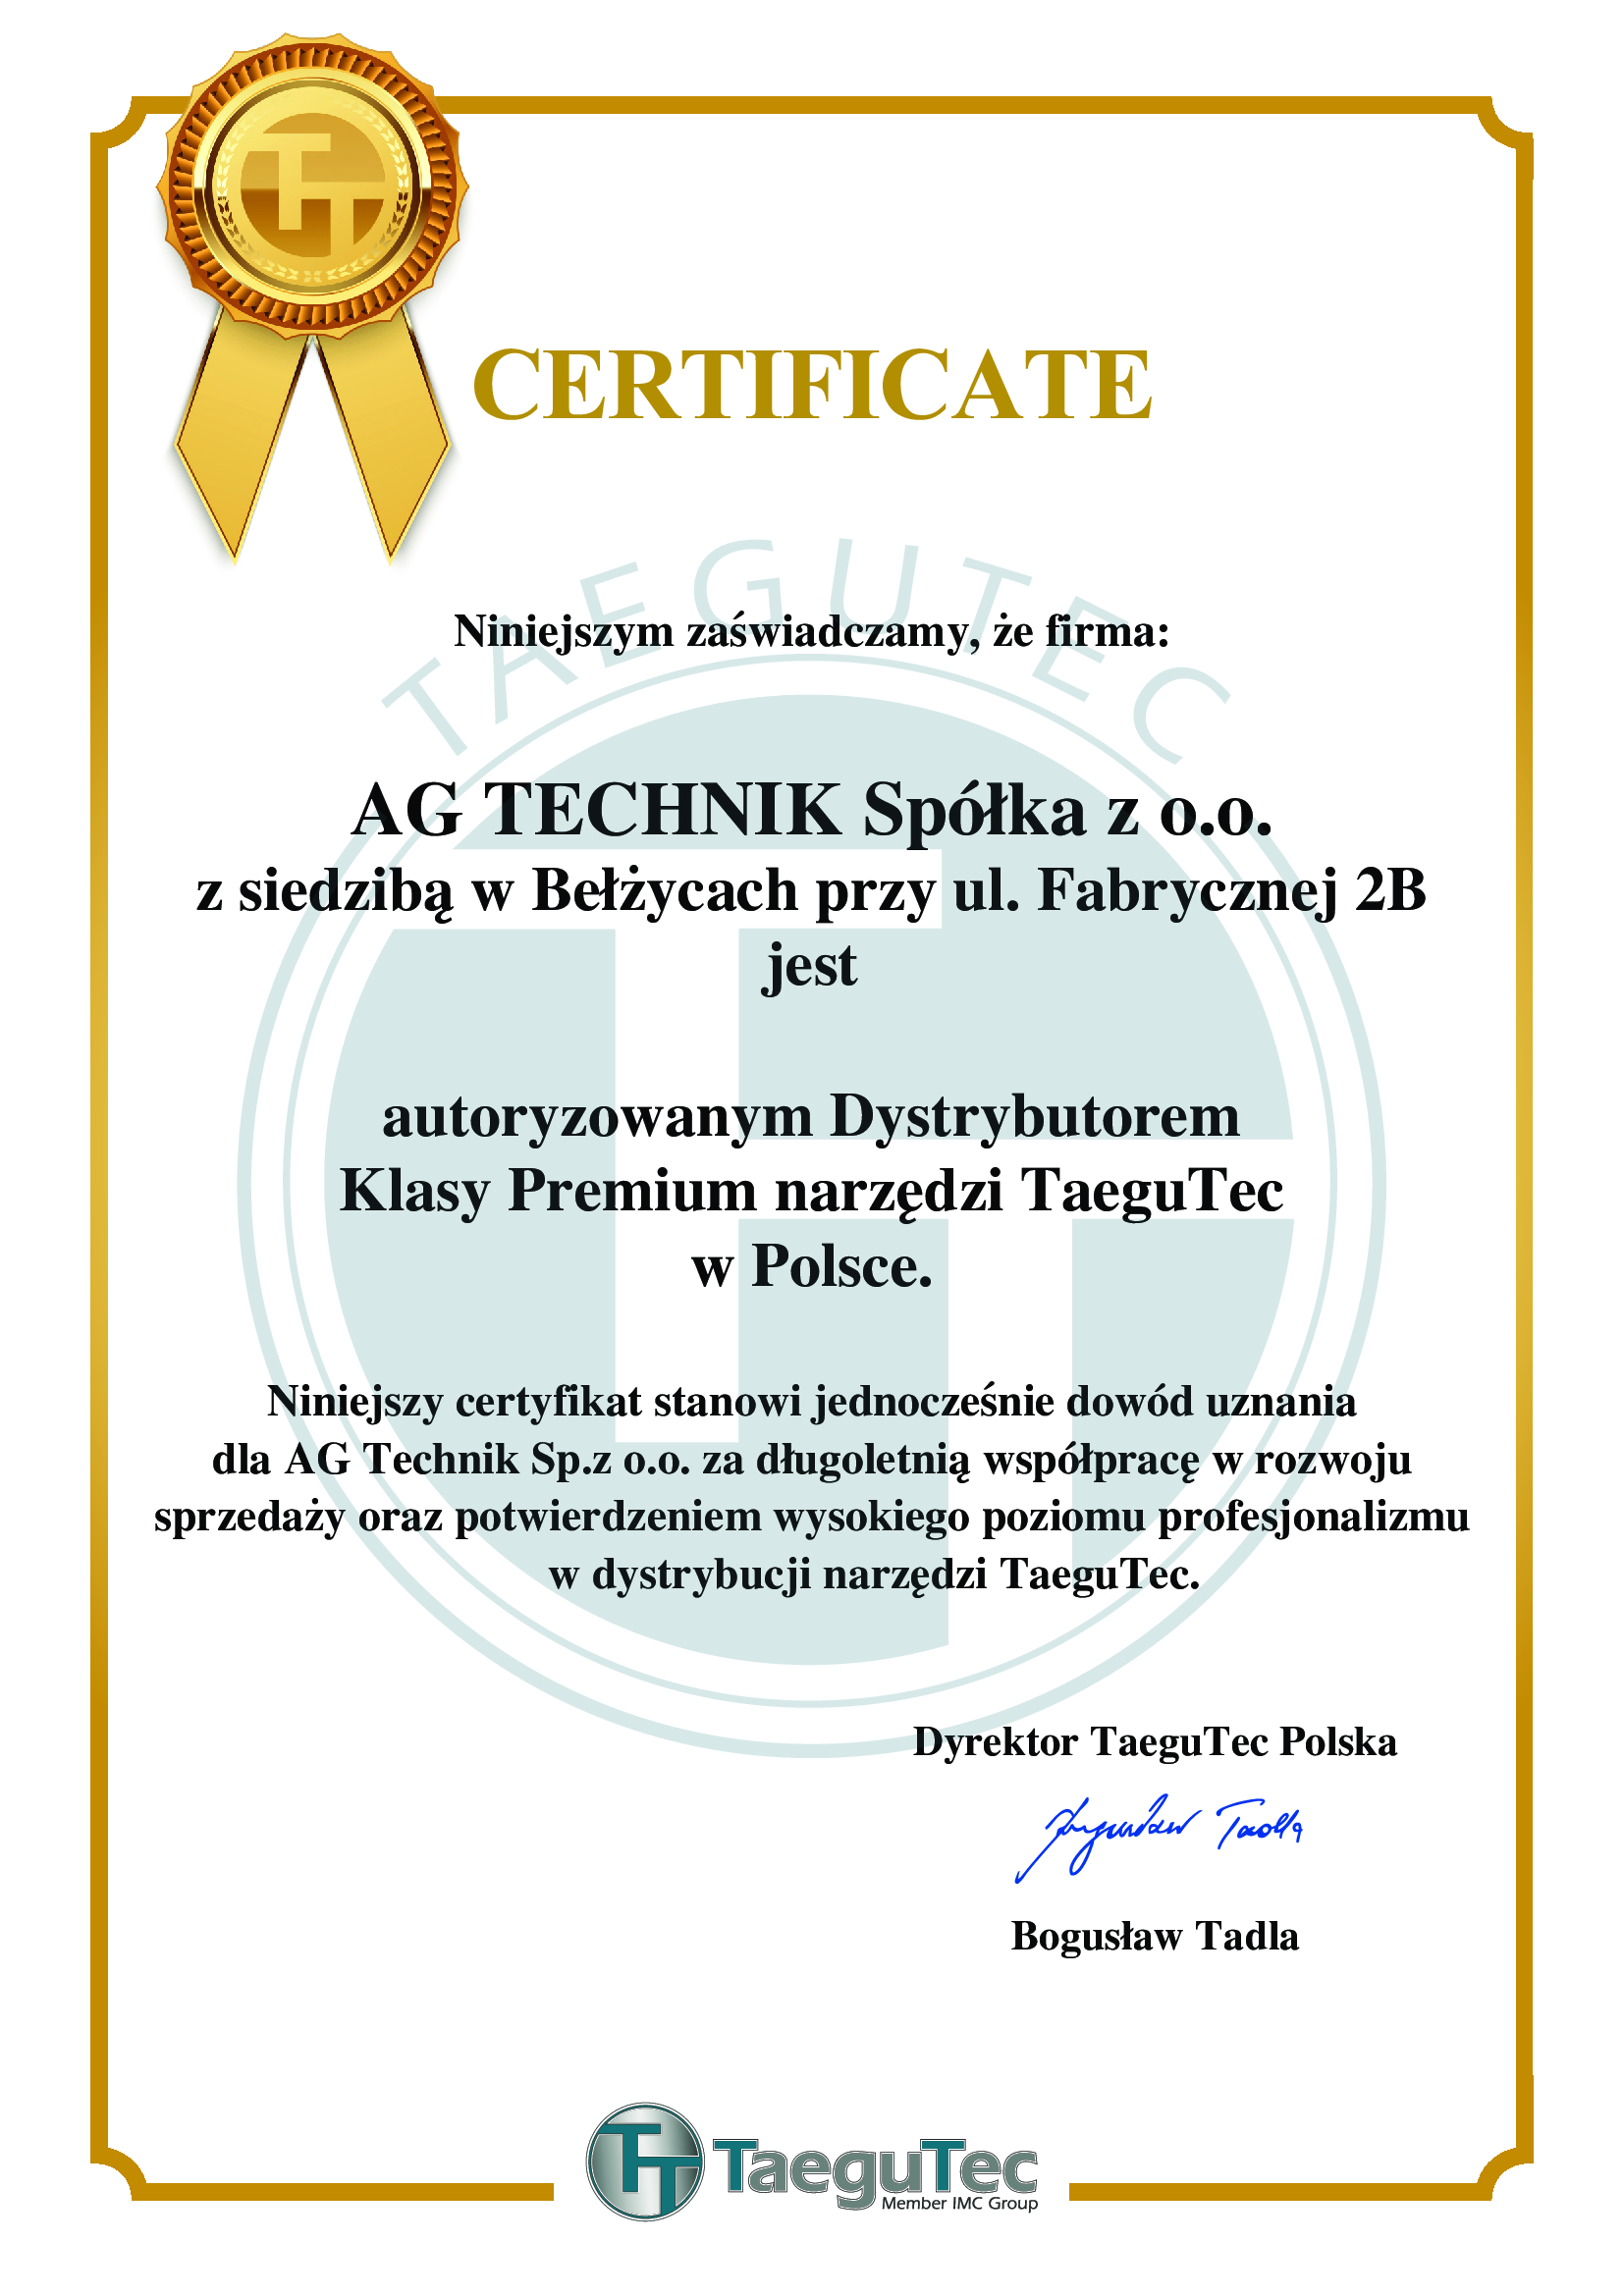 AG TECHNIK Autoryzowany Dystrybutor Firmy TaeguTec certyfikat 2023